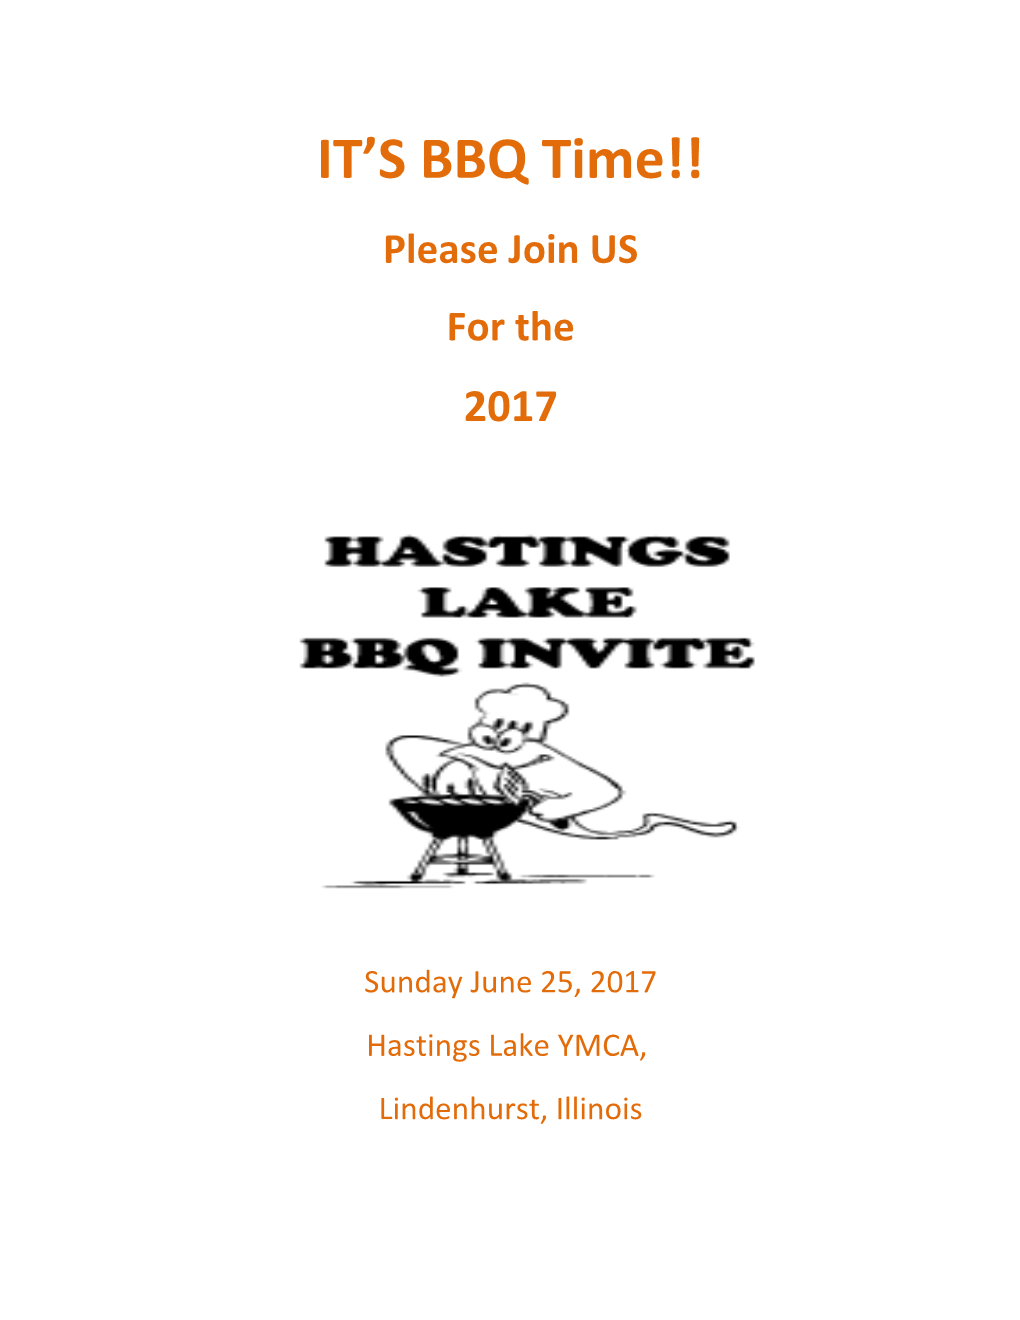 Hastings Lake YMCA Summer BBQ Invite